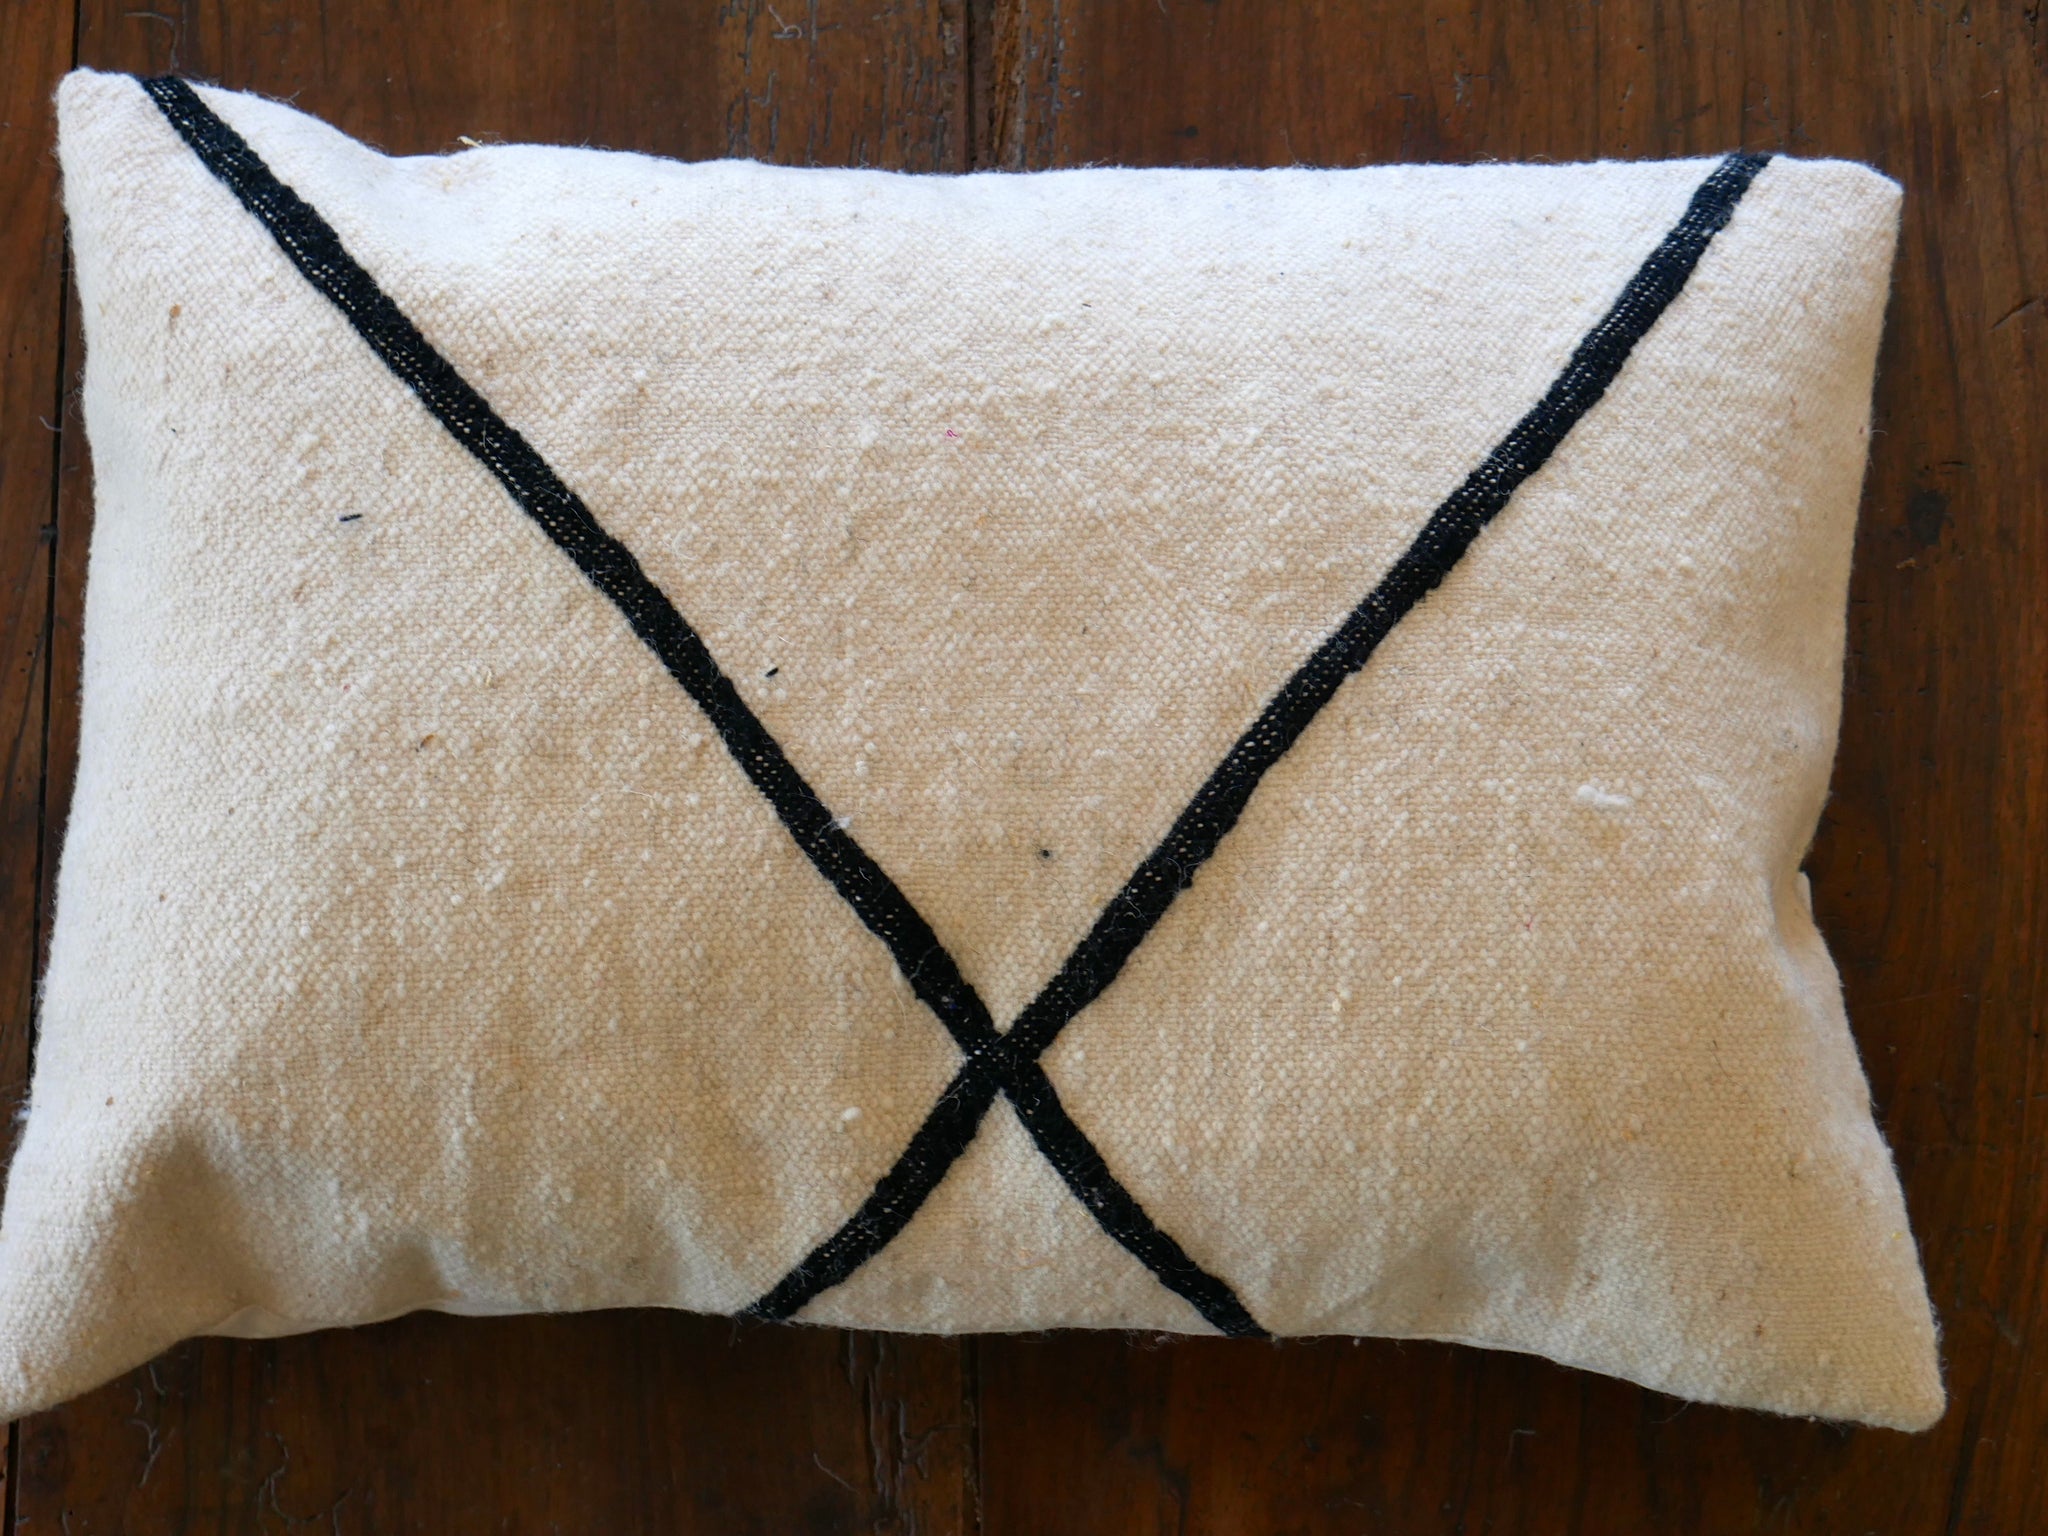 Cream with Black cross detail cushion